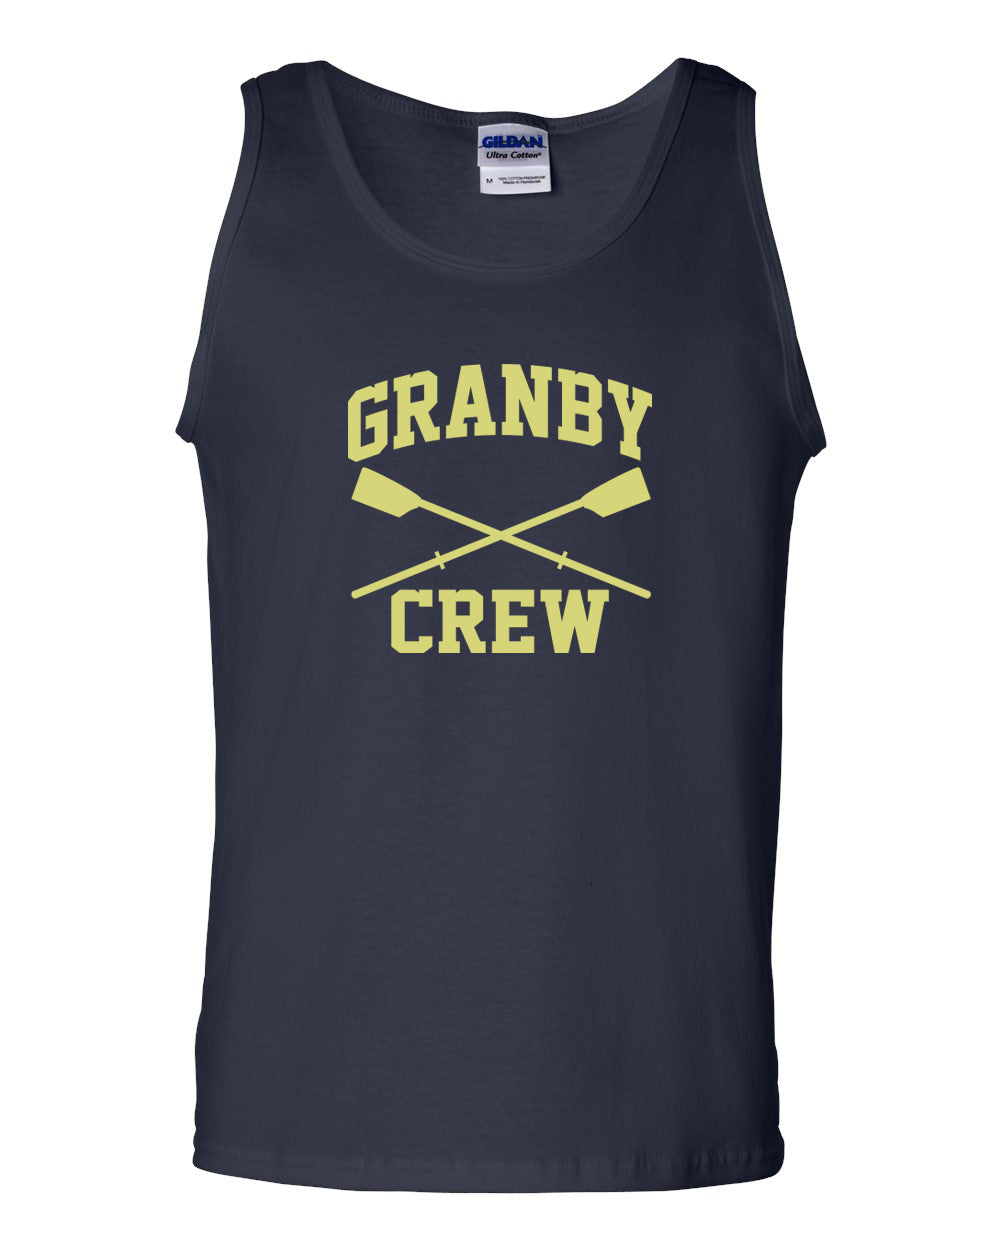 100% Cotton Granby Crew Tank Top